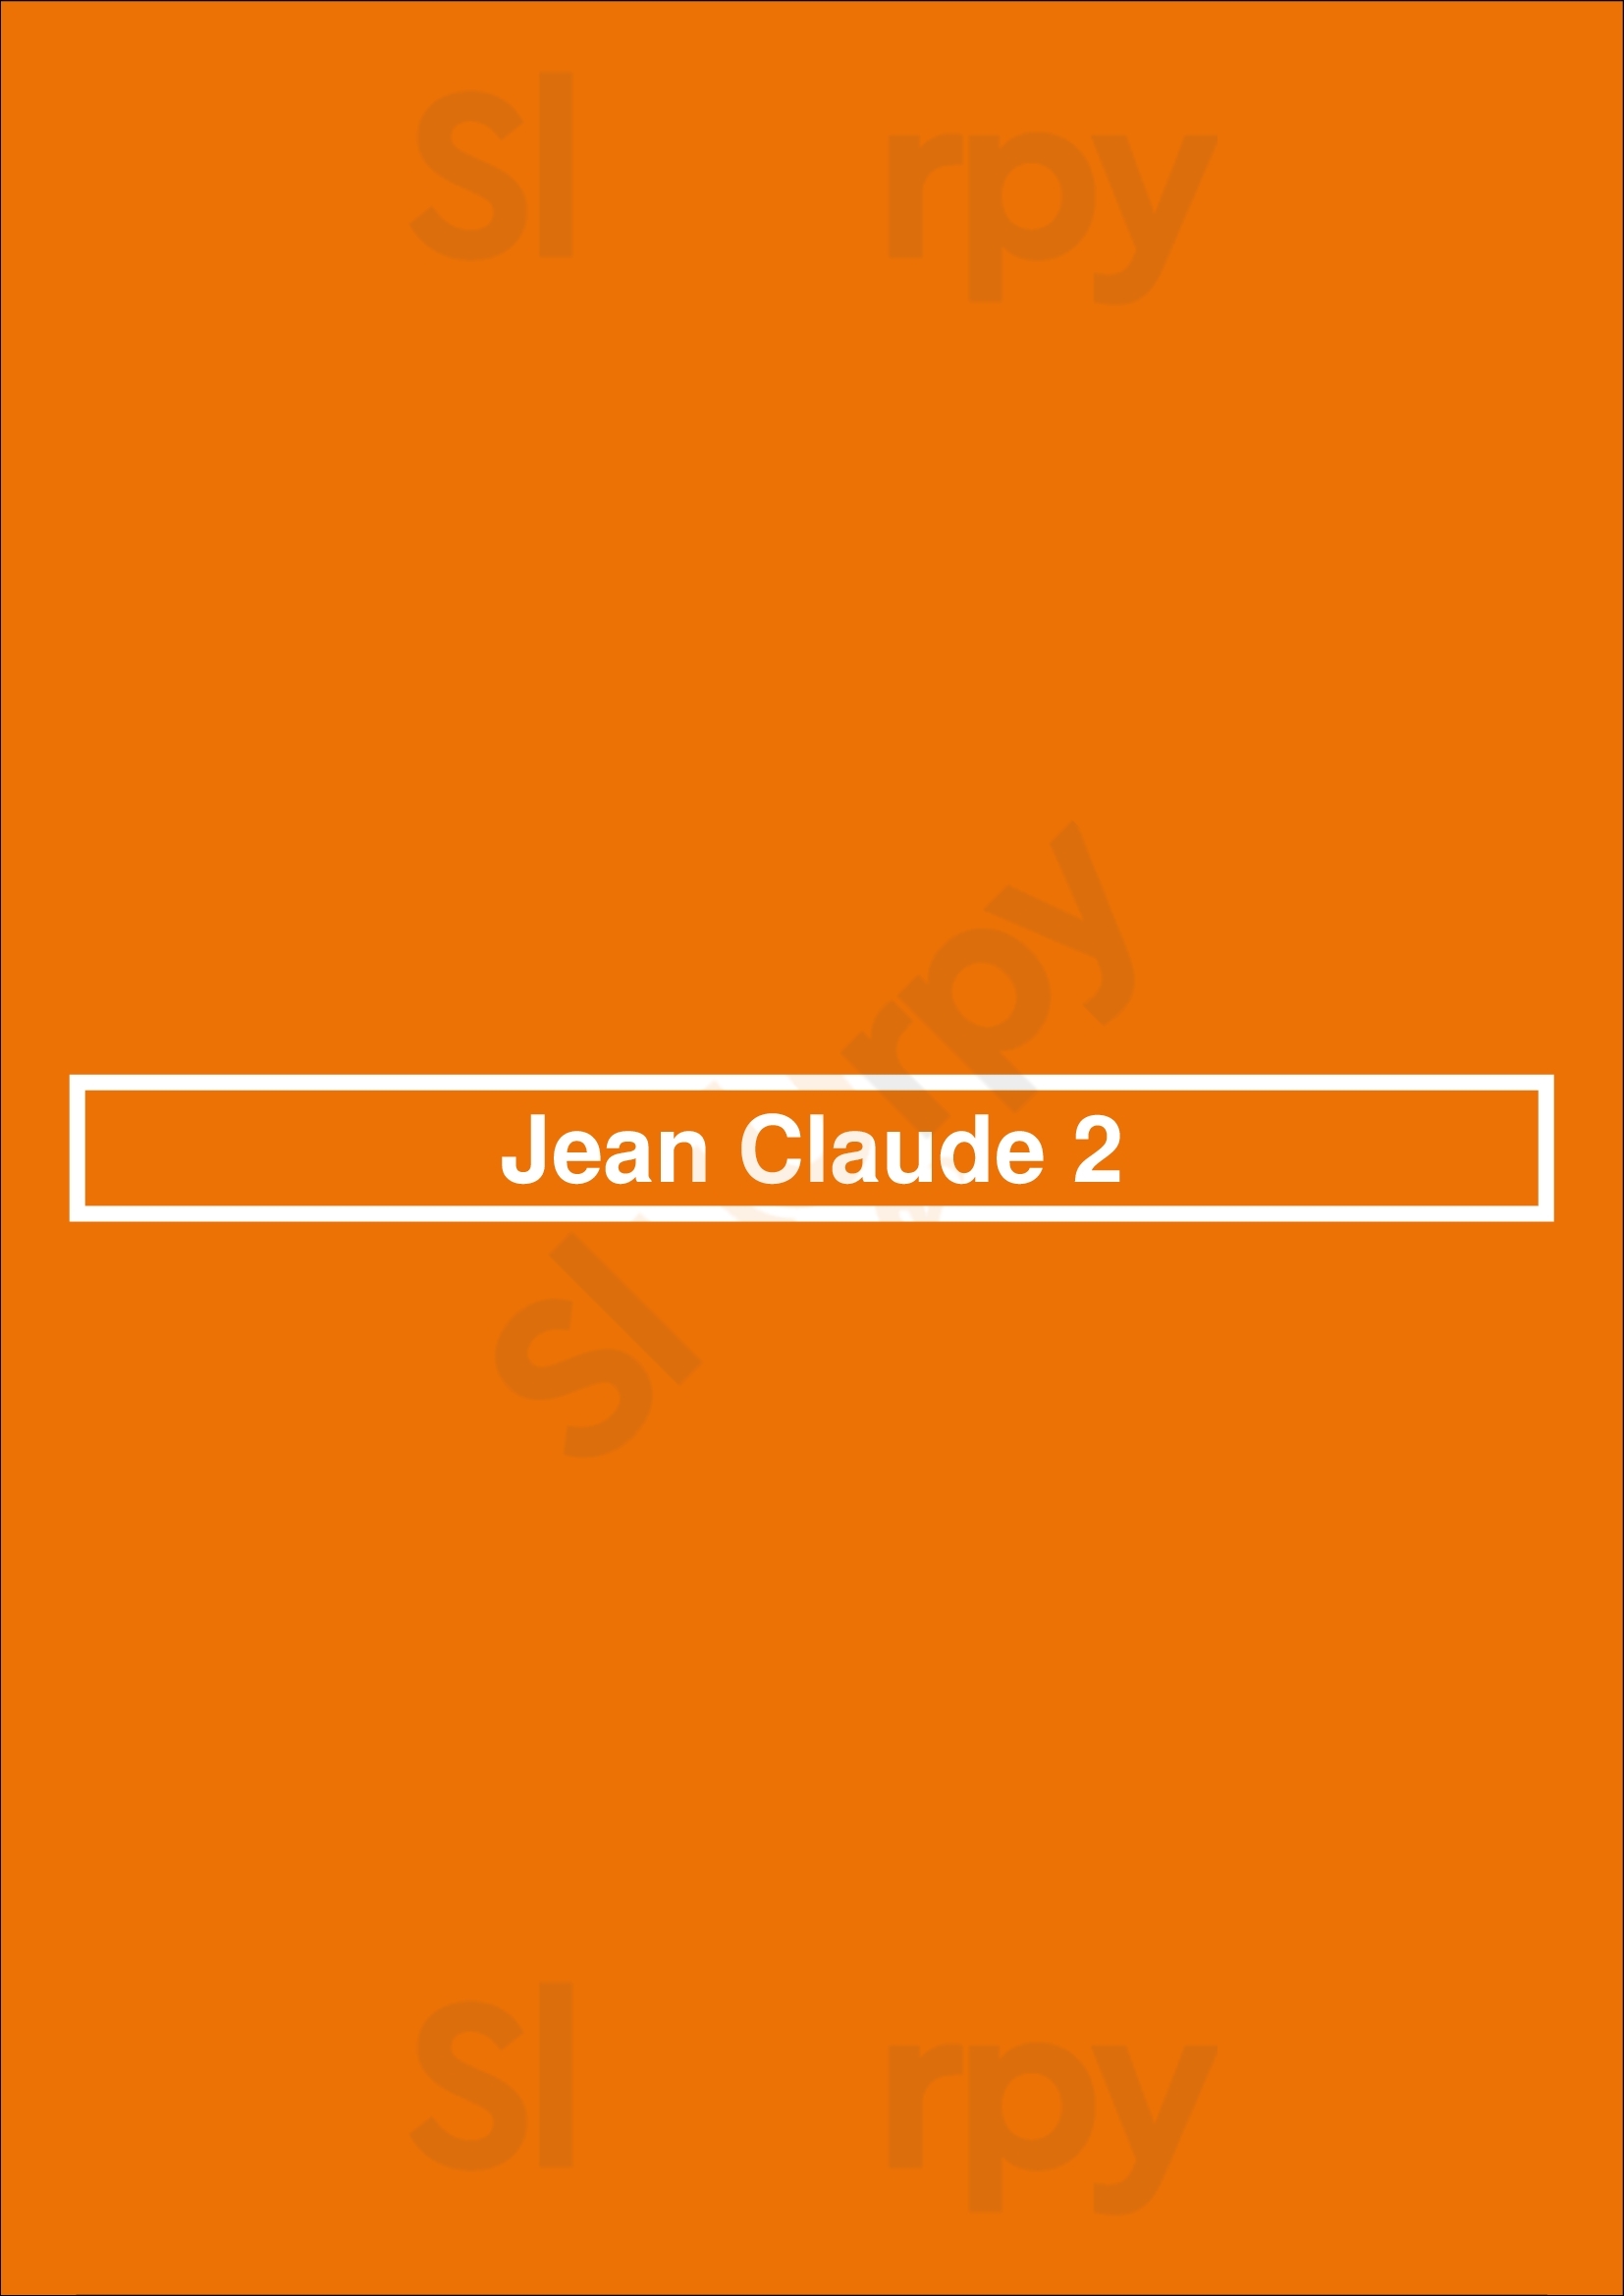 Jean Claude 2 New York City Menu - 1